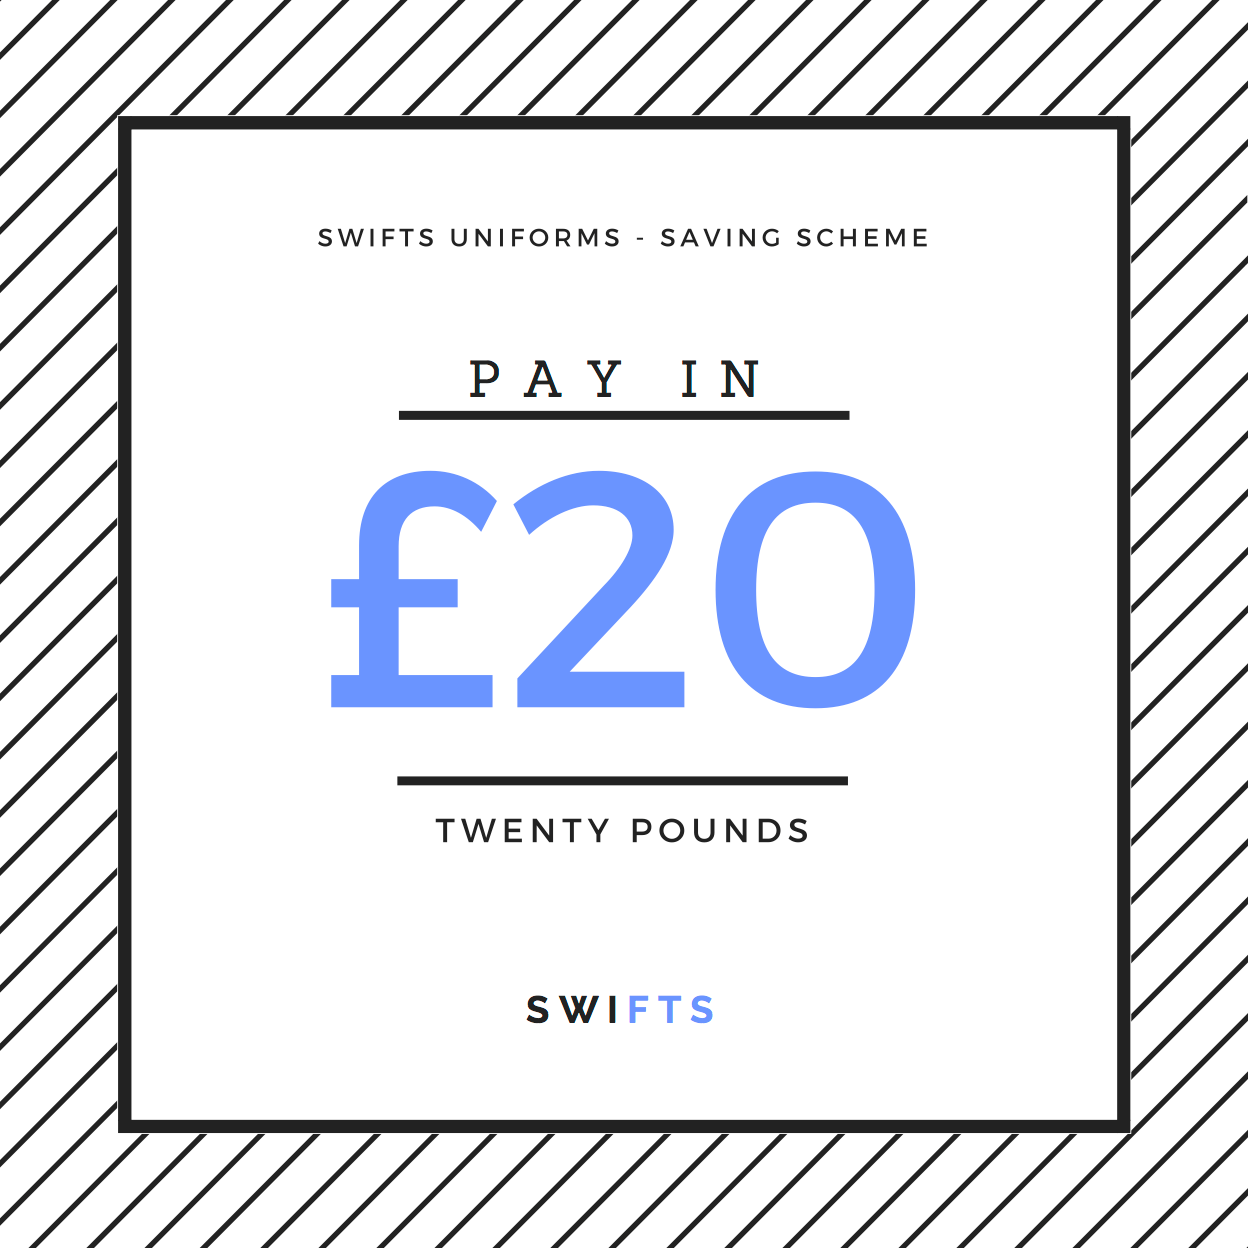 Add £20 - Swifts Uniforms